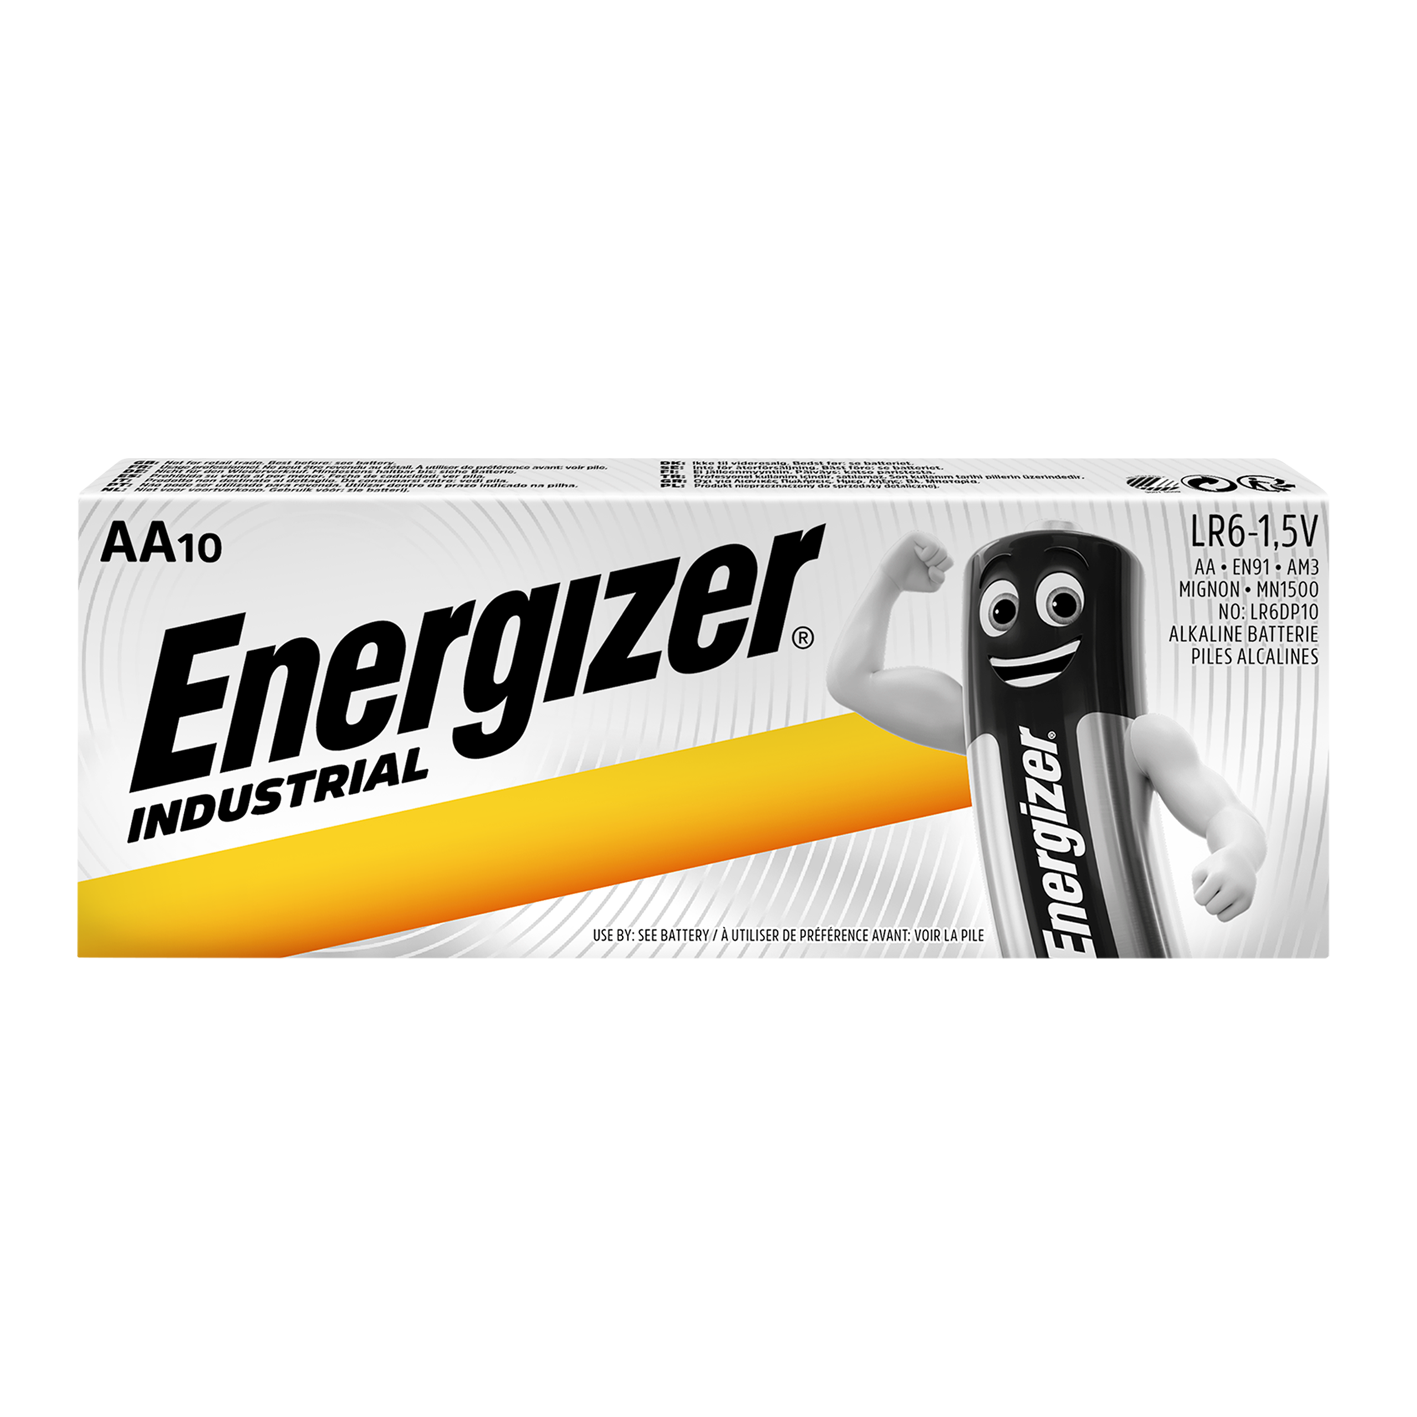 Energizer AA Industrial, paquete de 10